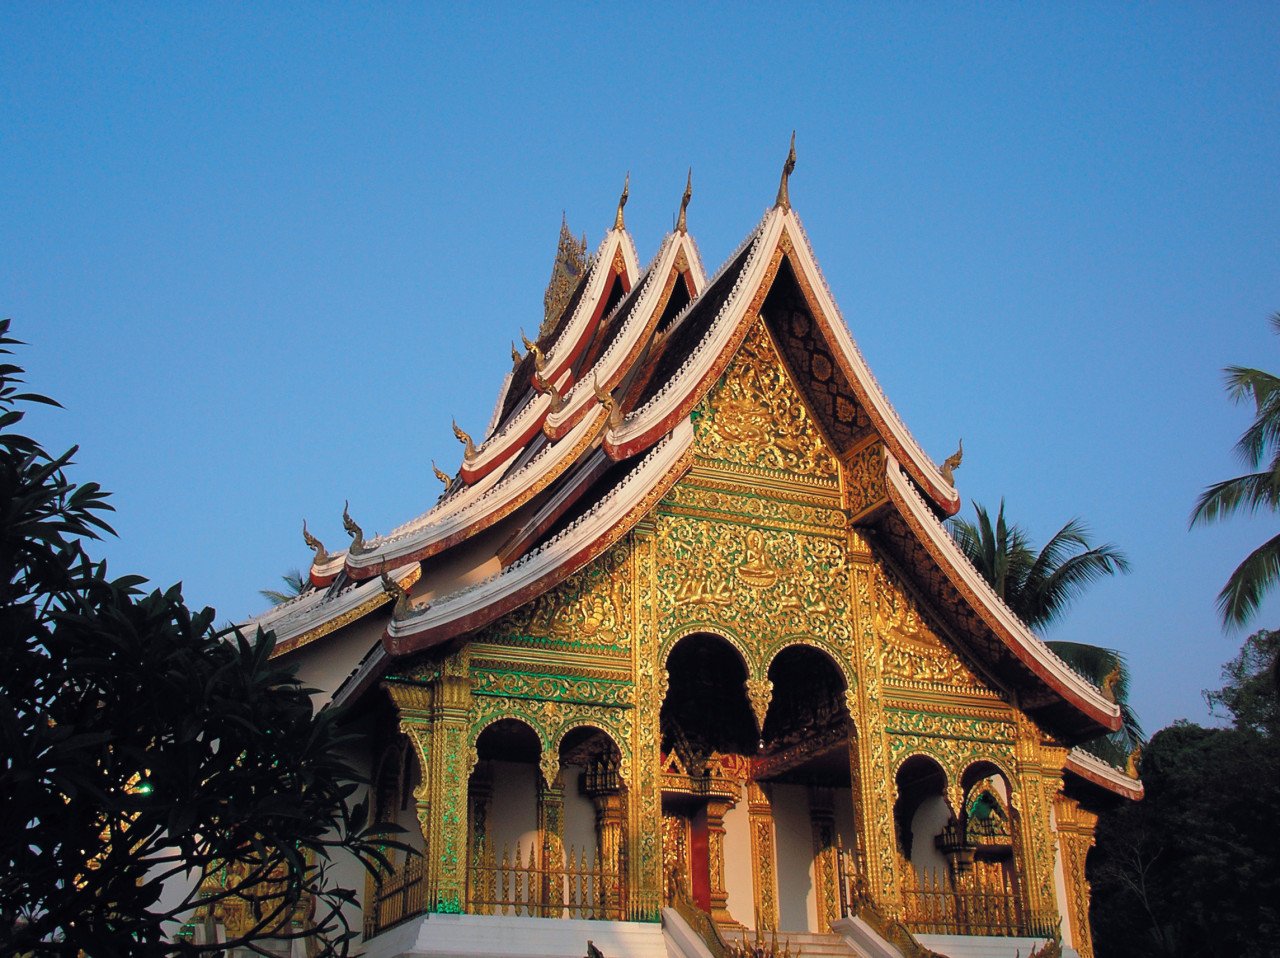 Day6 : The surroundings of Luang Prabang